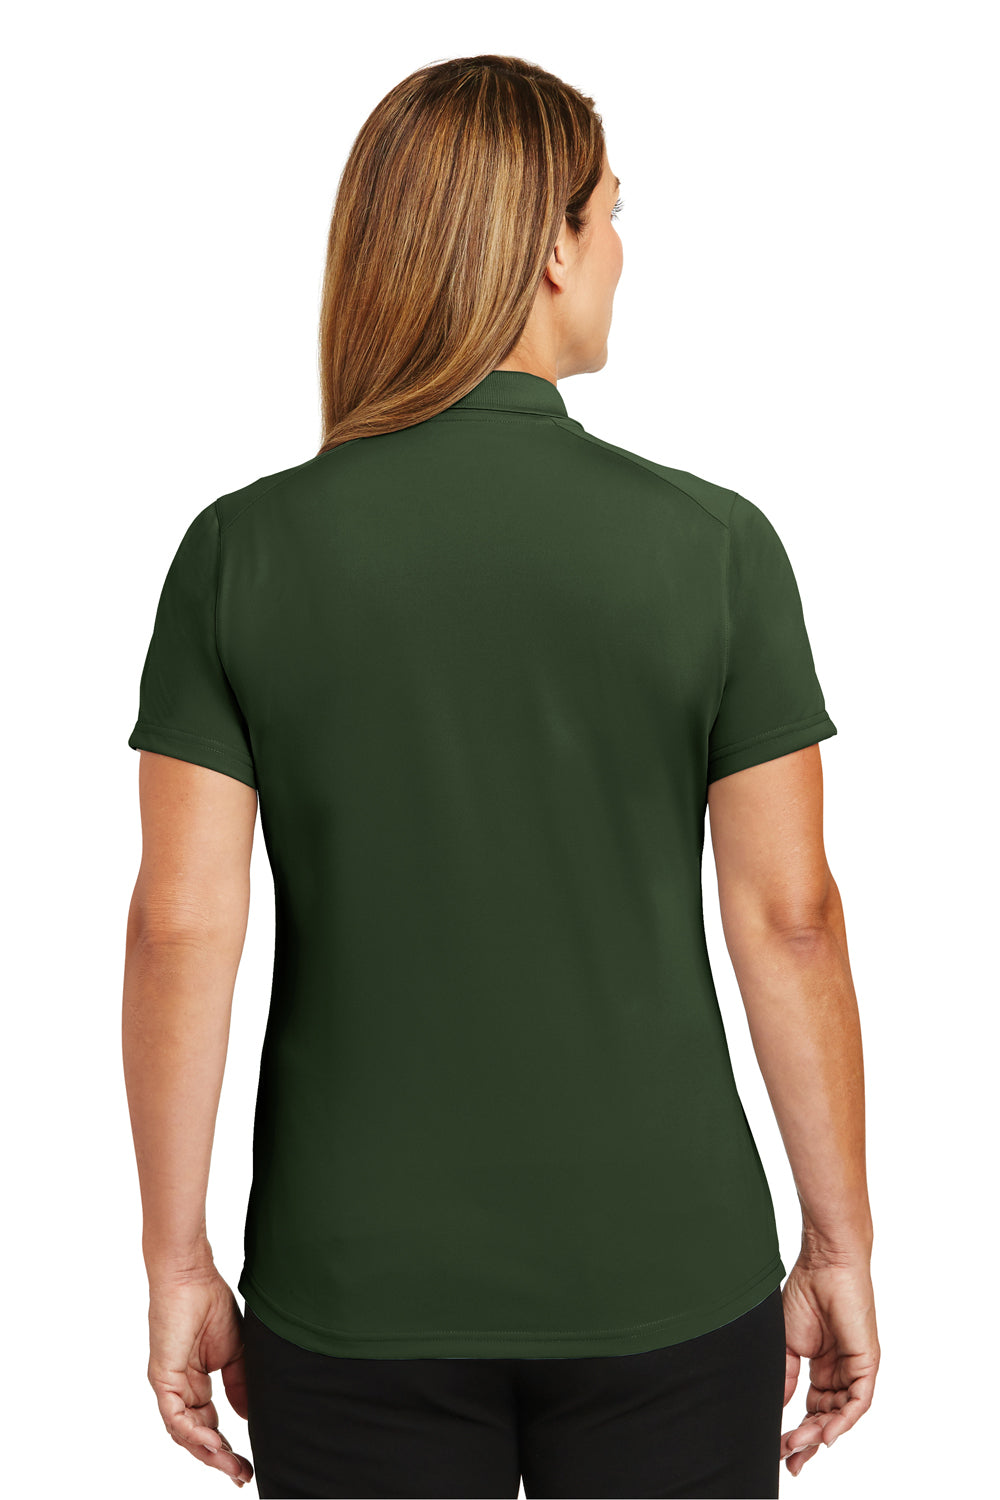 CornerStone CS419 Womens Select Moisture Wicking Short Sleeve Polo Shirt Dark Green Back